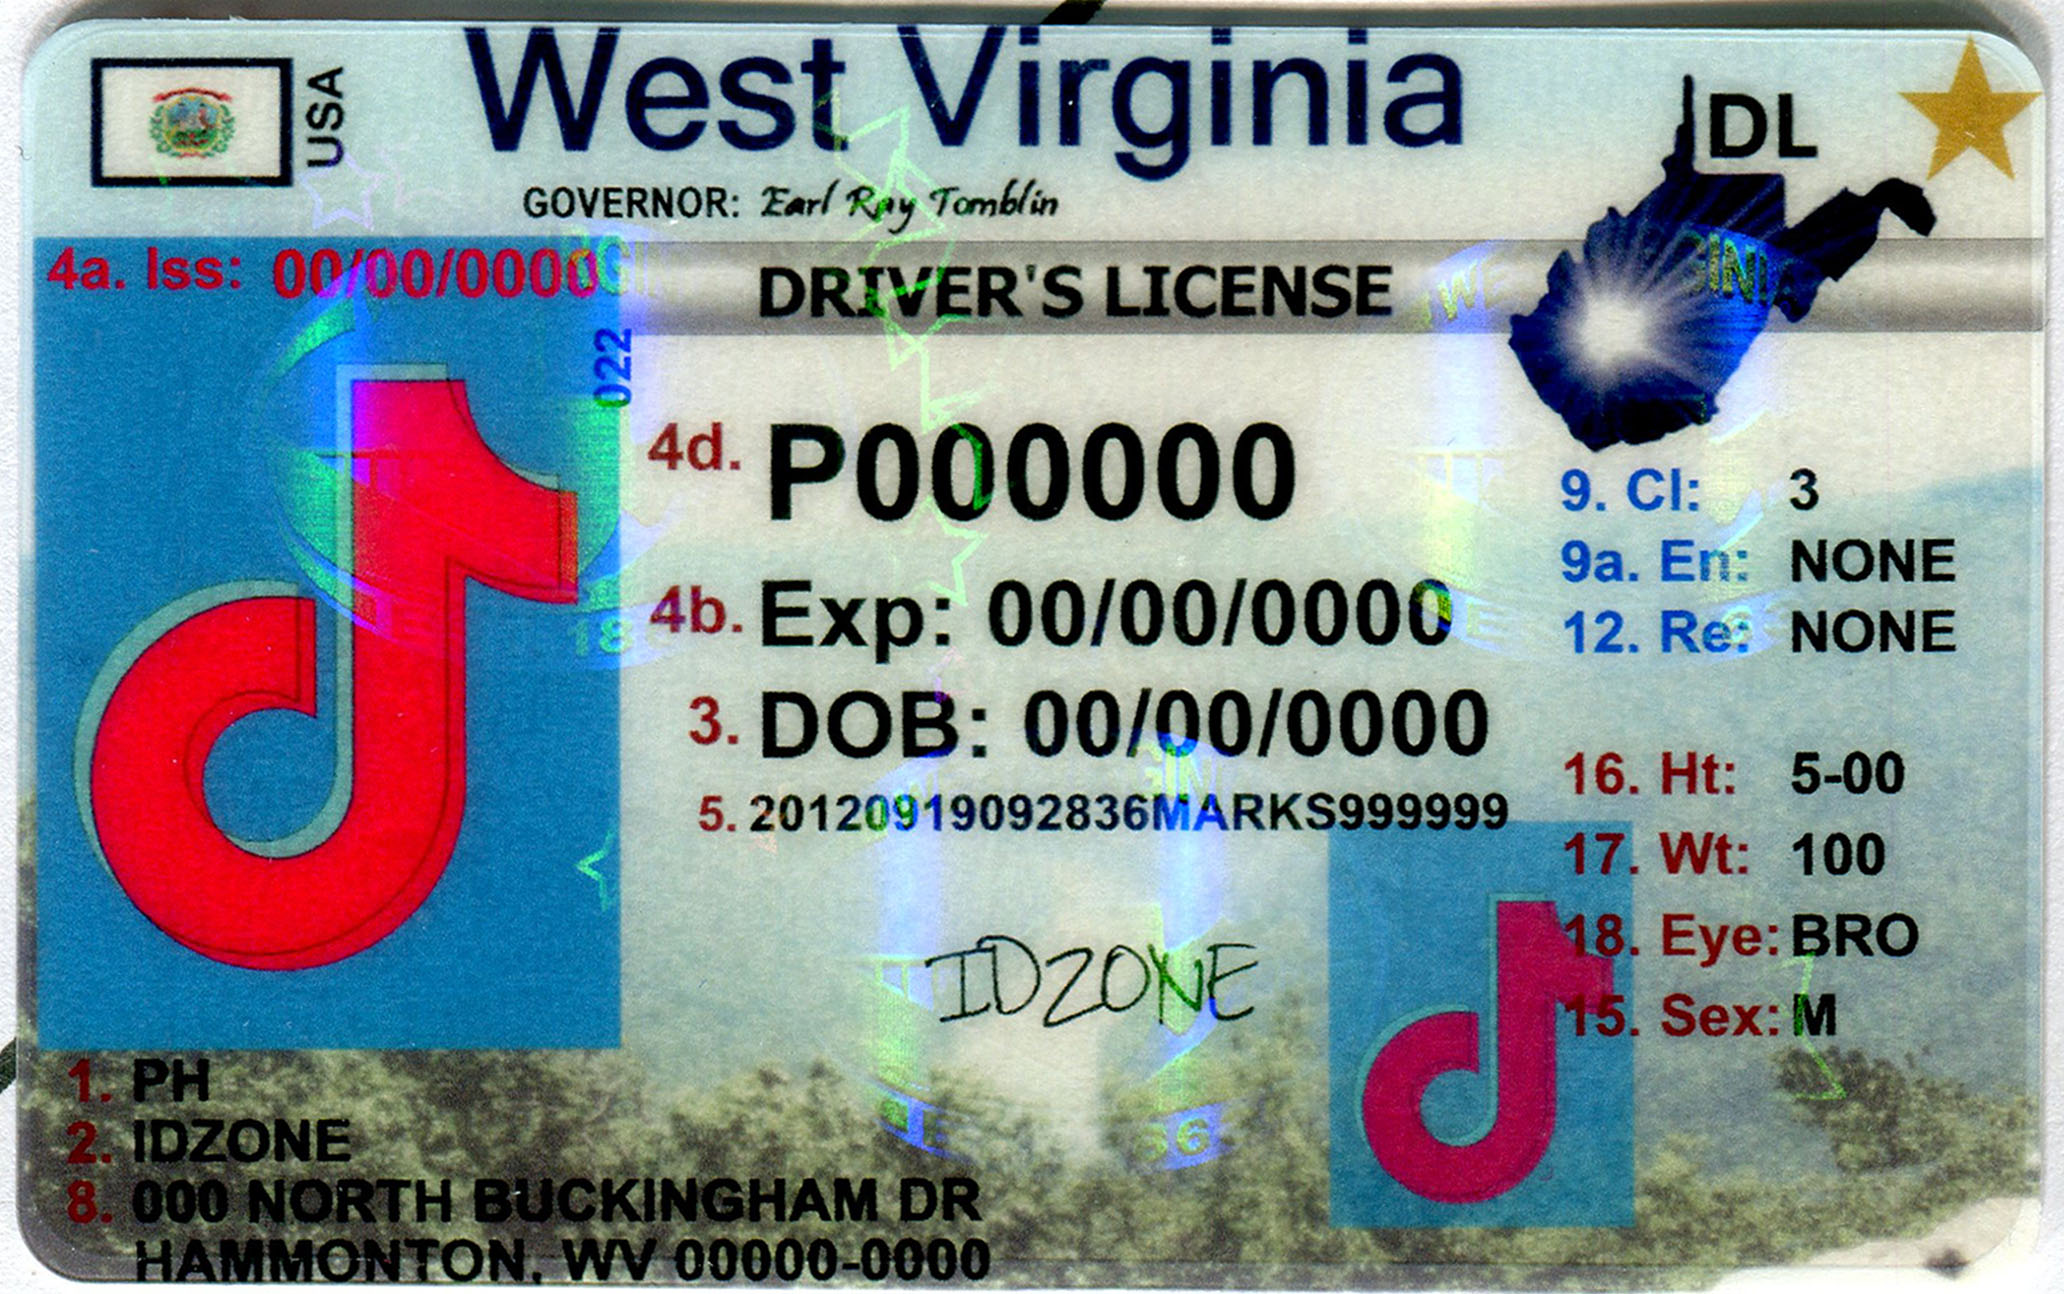 WEST VIRGINIA fake id